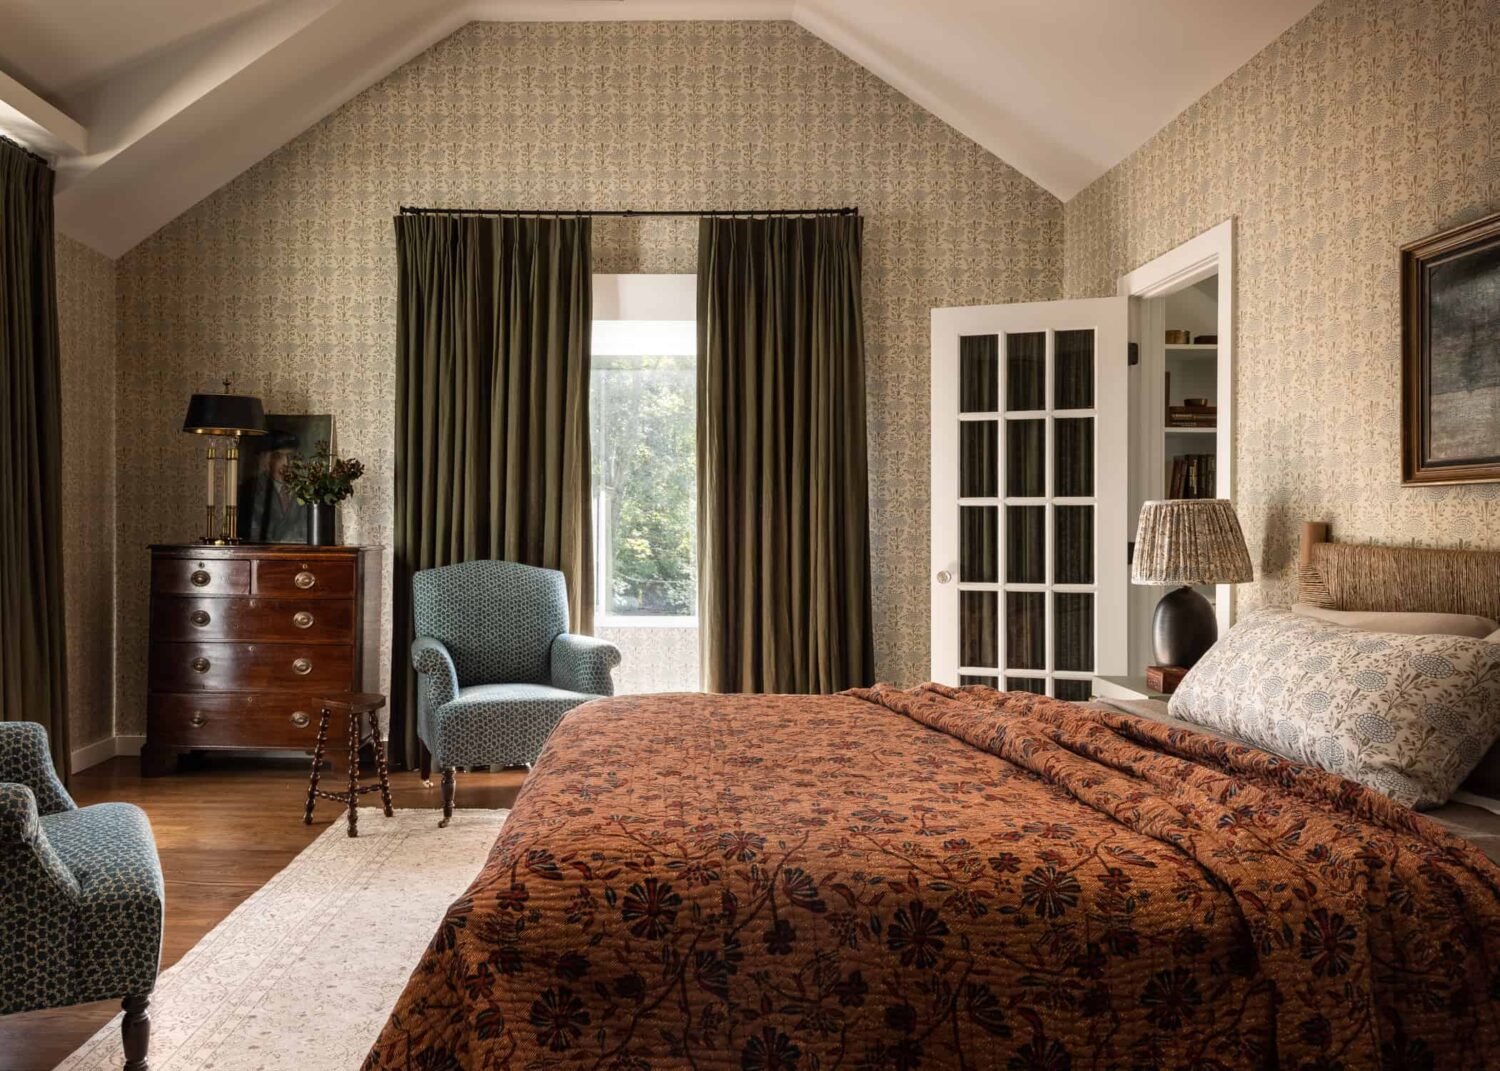 Heidi-Caillier-Design-Hudson-Valley-house-bedroom-wallpaper-eaves-cozy-old-beams-nordroom